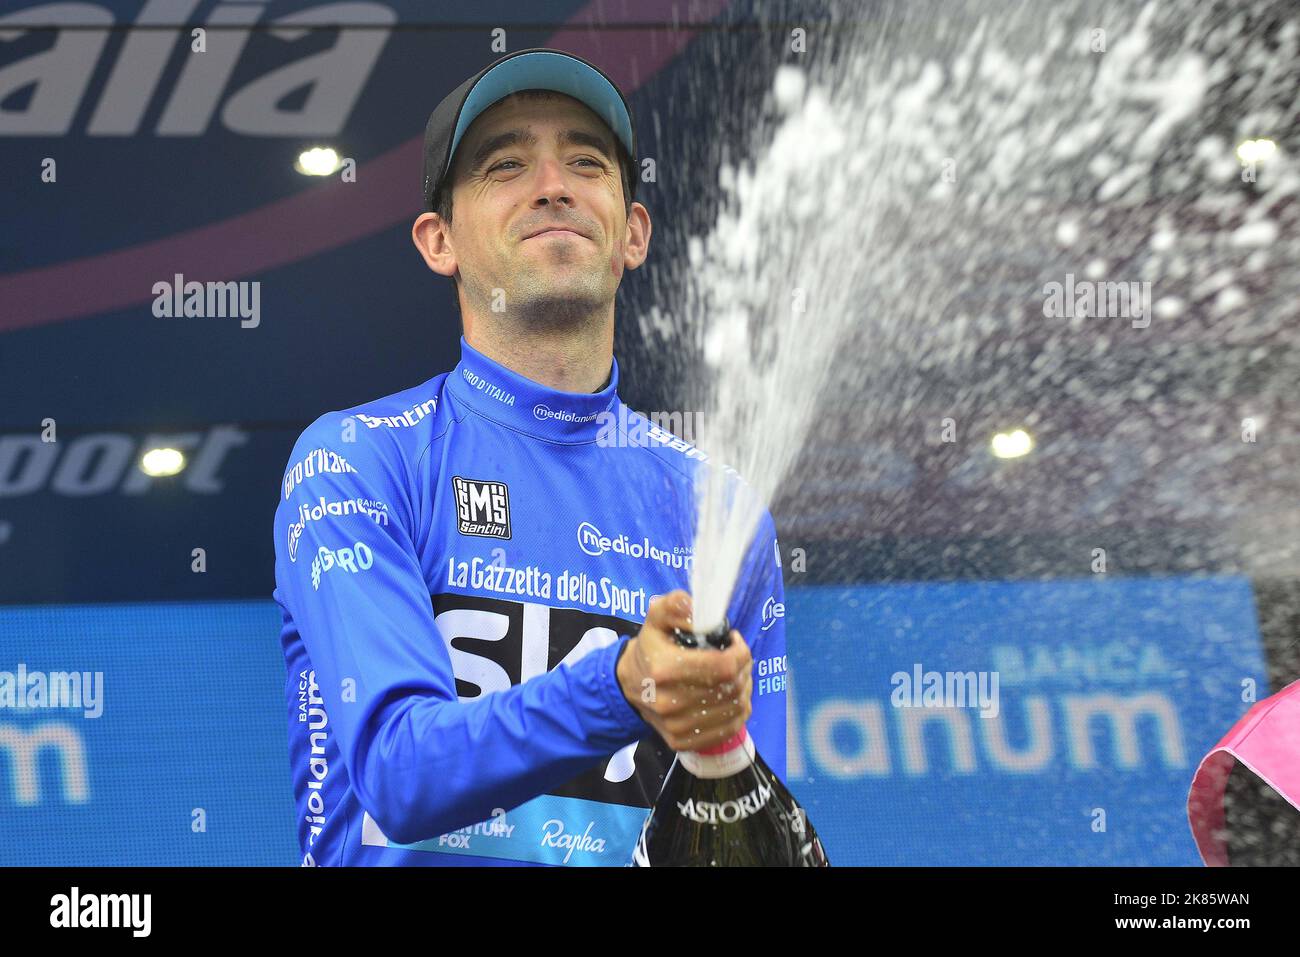 Mikel Nieve vince la maglia blu (leader GPM) Foto Stock